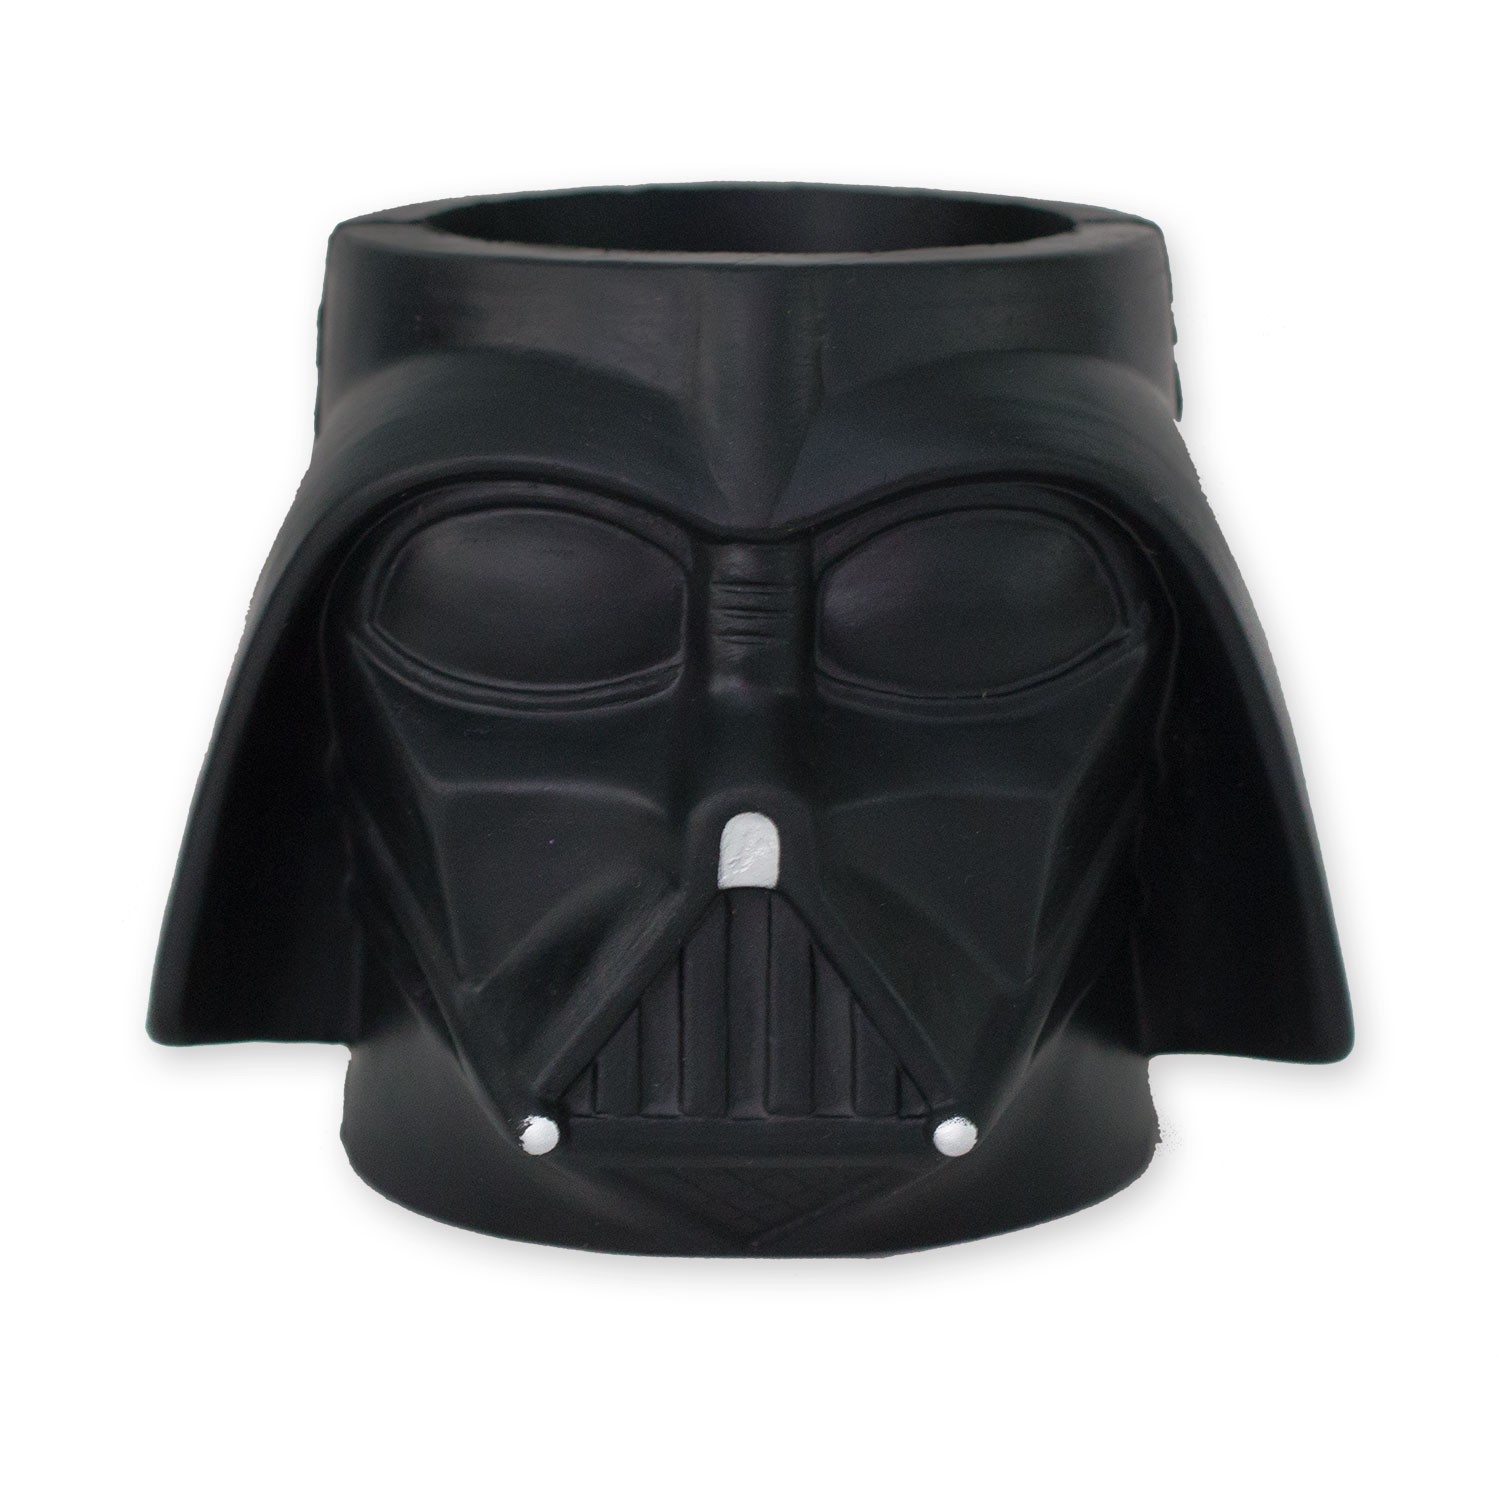 Star Wars Darth Vader Can Cooler